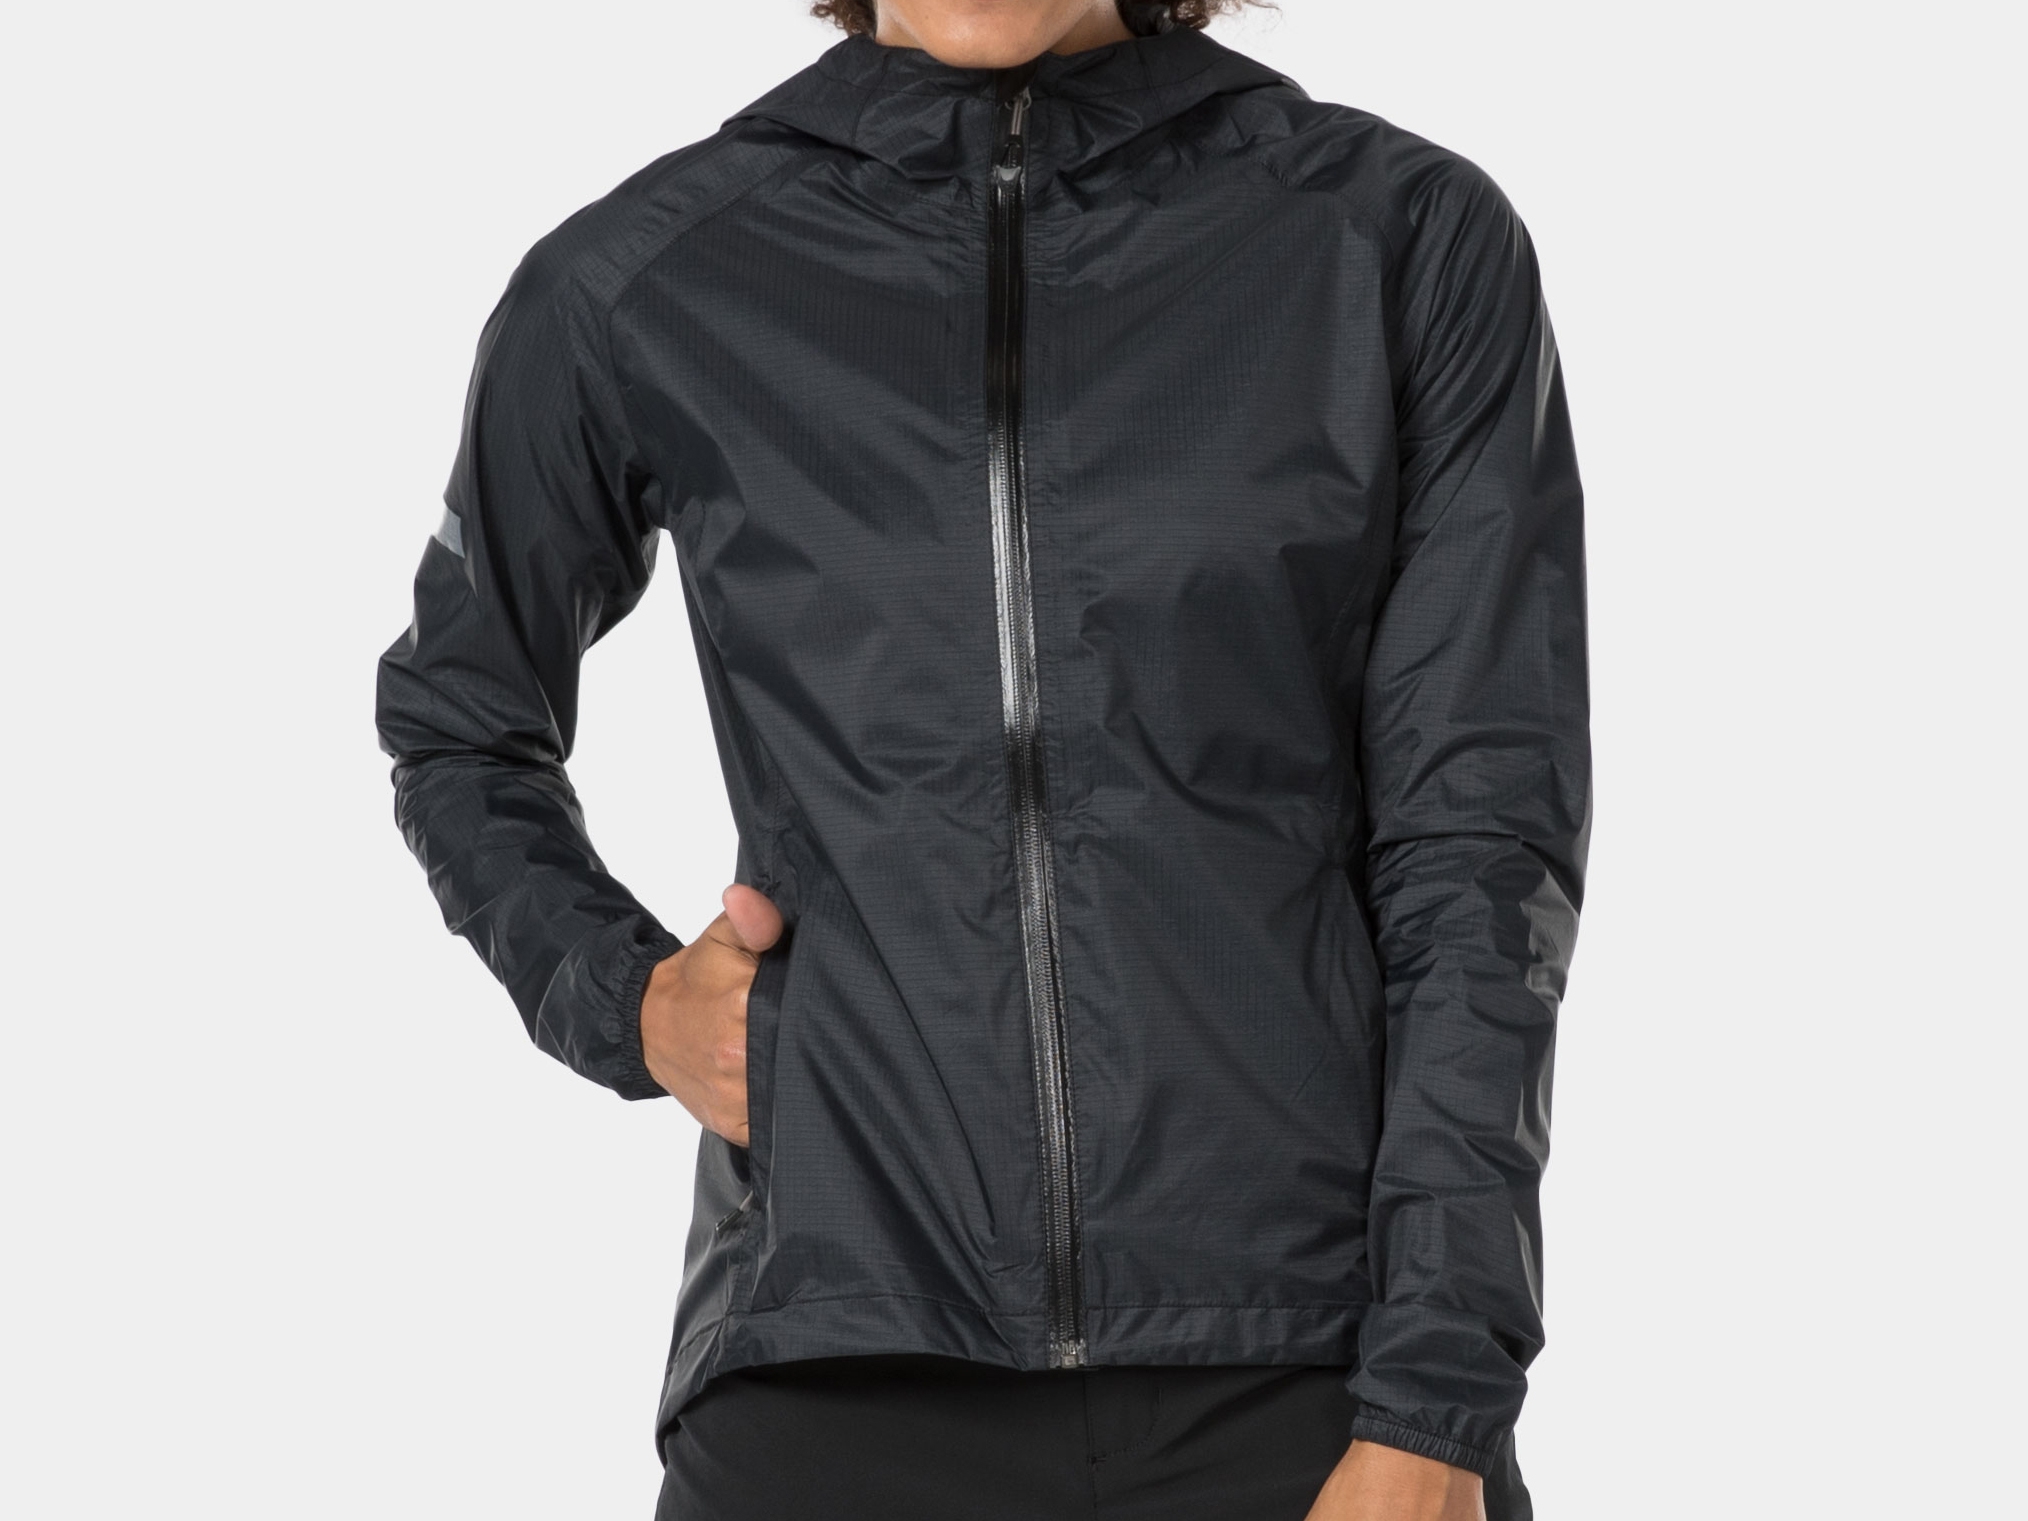 womens mountain bike jacket